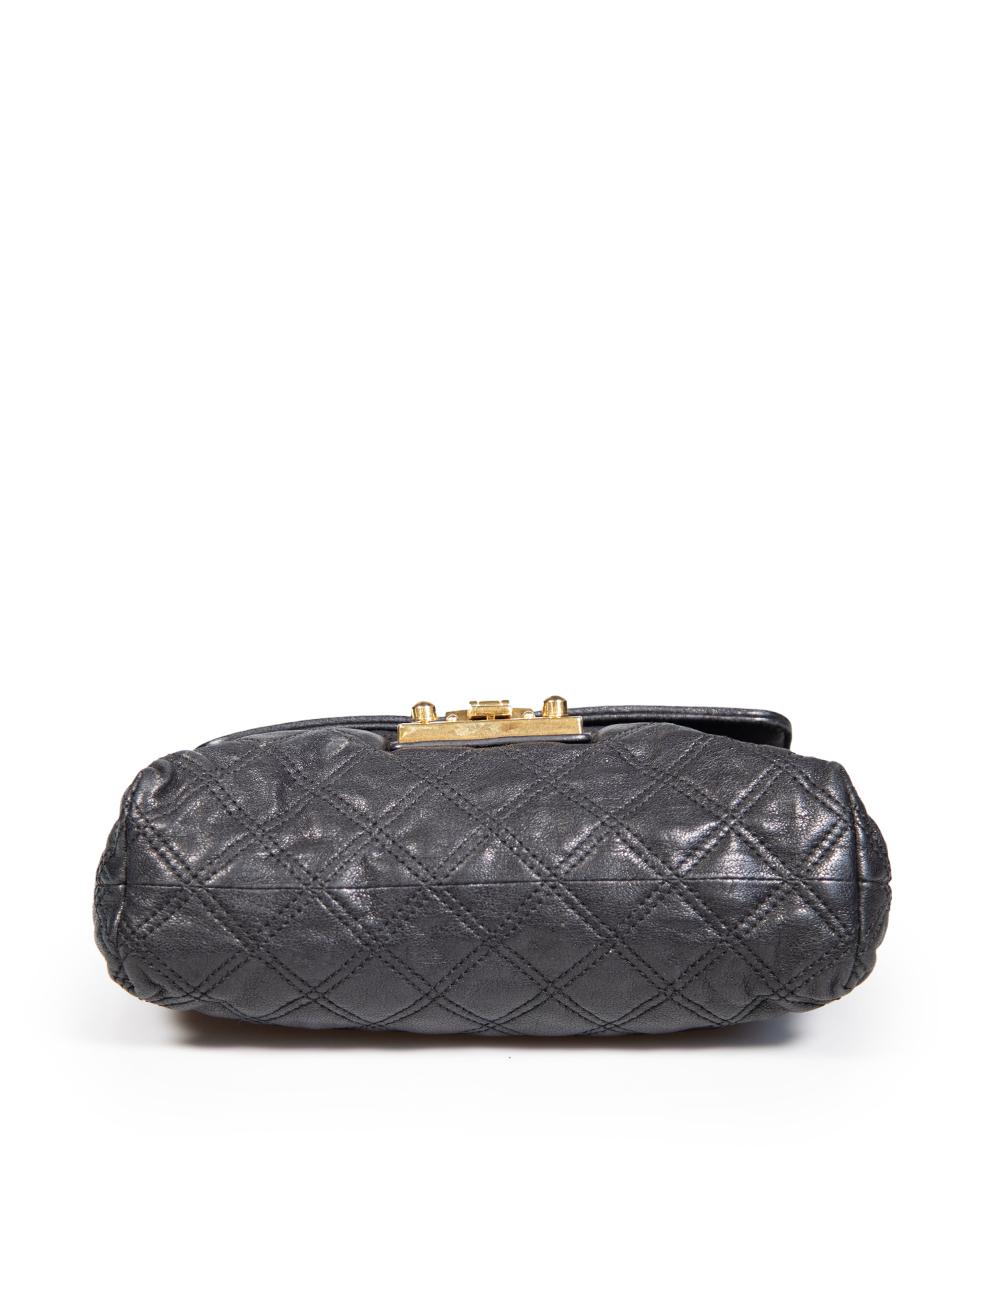 Women's Marc Jacobs Black Leather Large Single Baroque Shoulder Bag For Sale